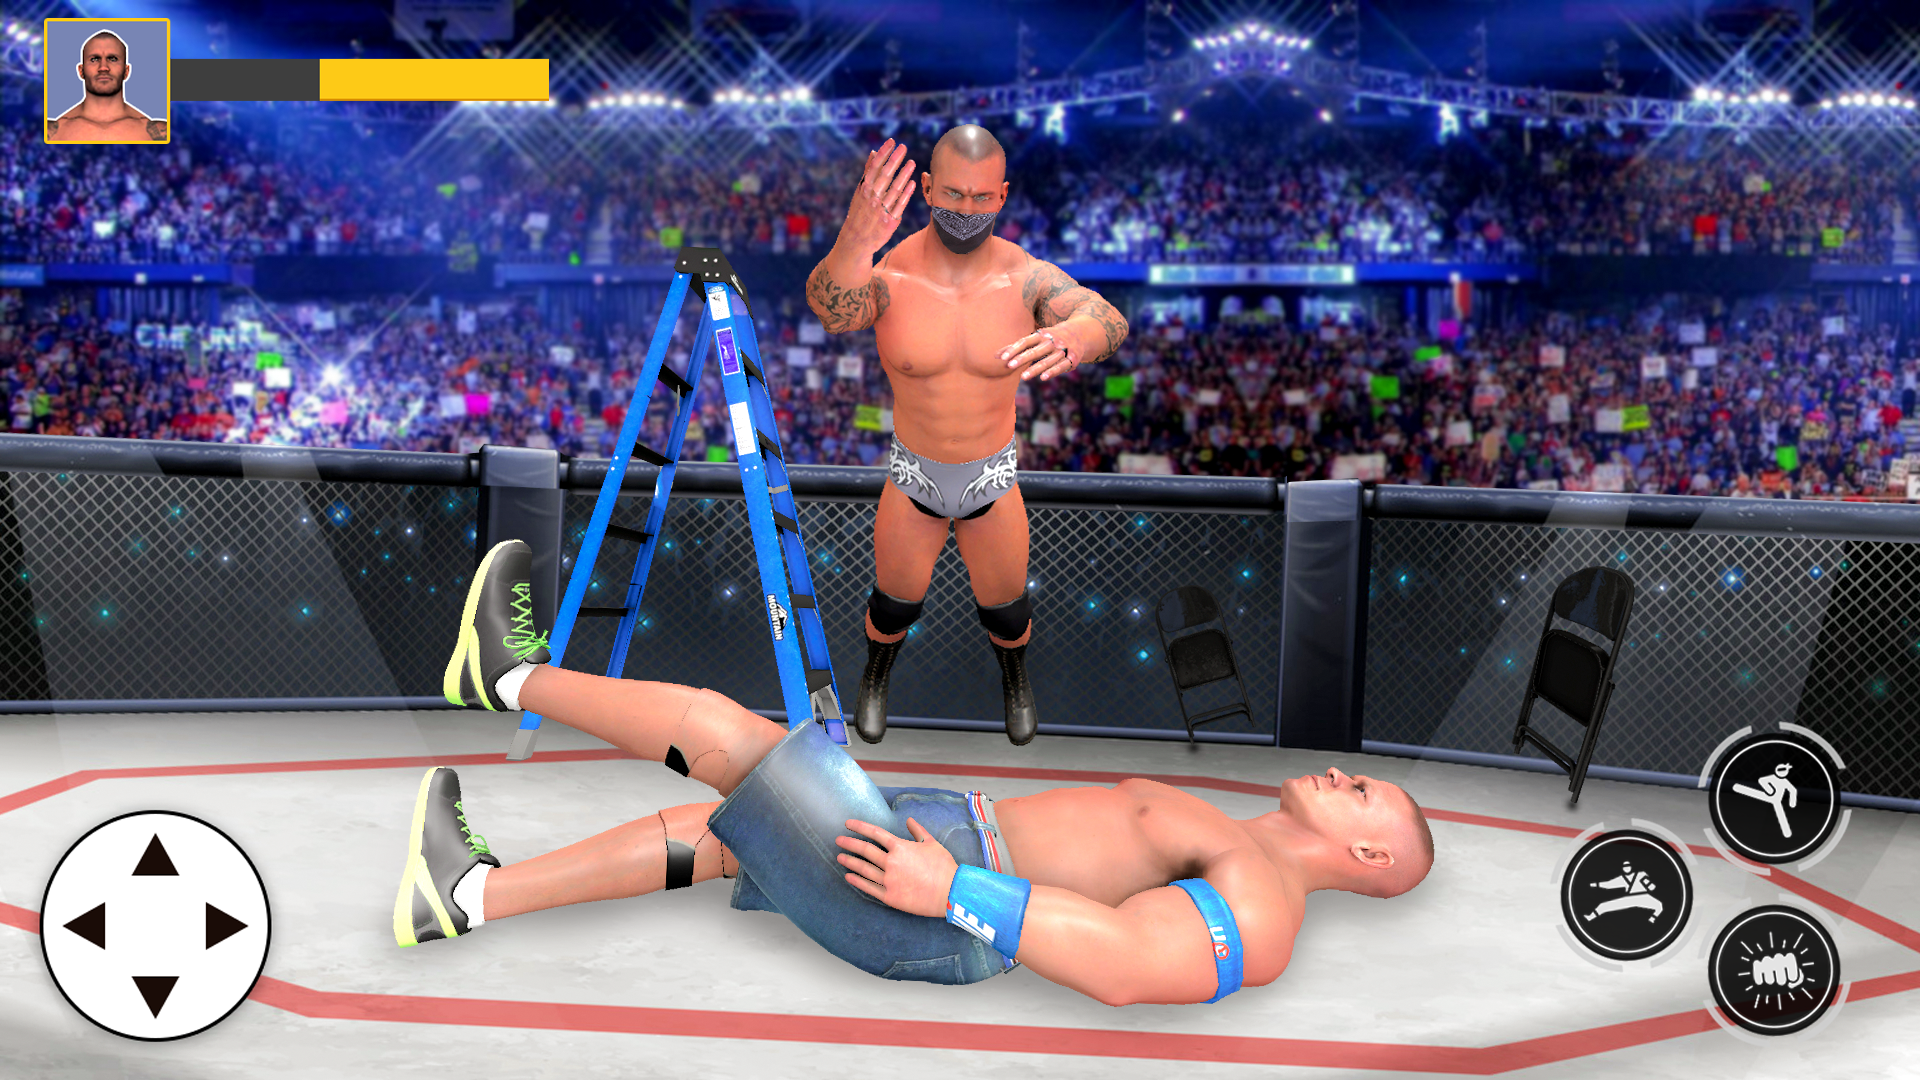 Gym Fighting Wrestling Arena screenshot game